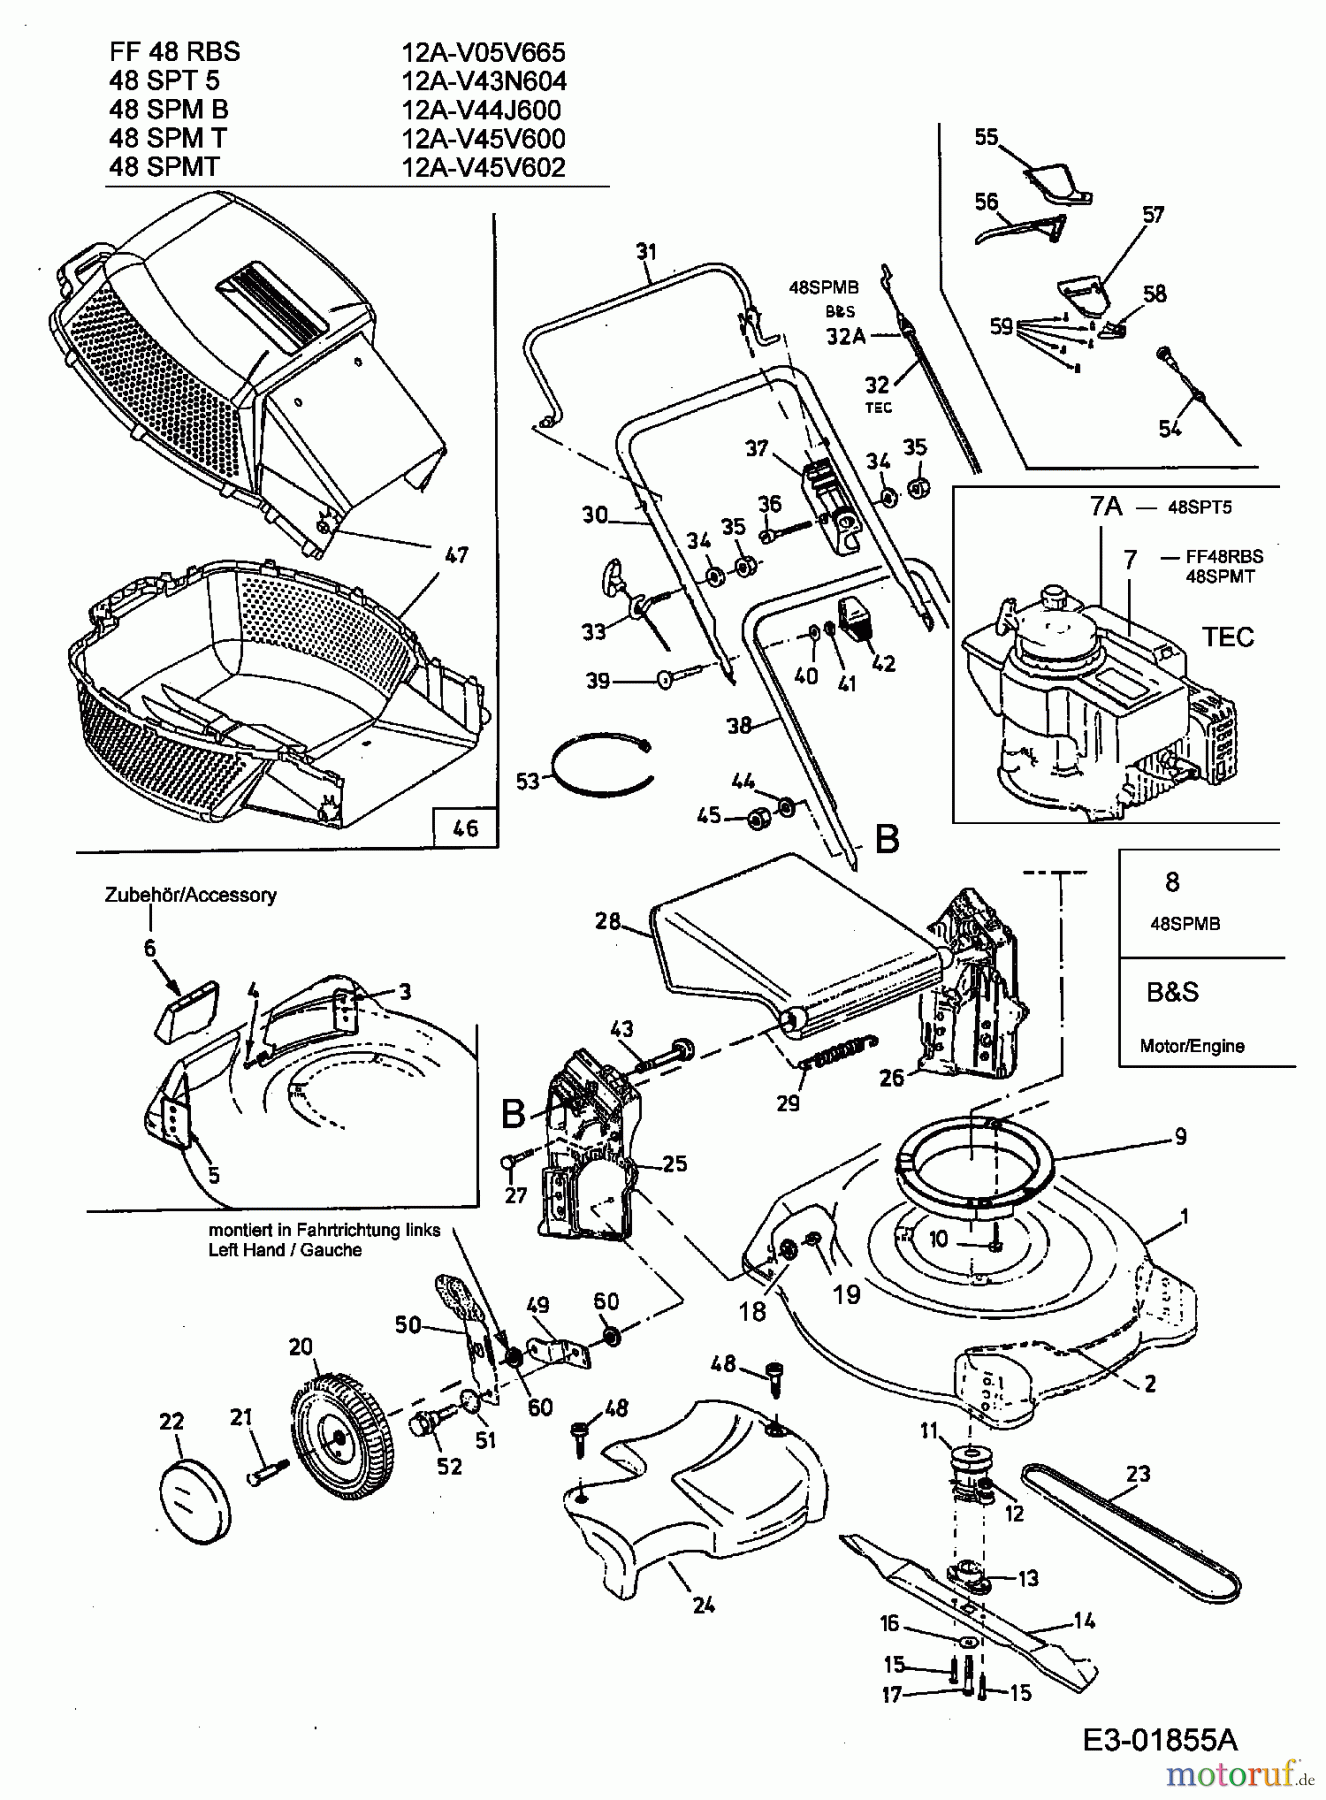  MTD Motormäher mit Antrieb 48 SPMB 12A-V44J600  (2003) Grundgerät